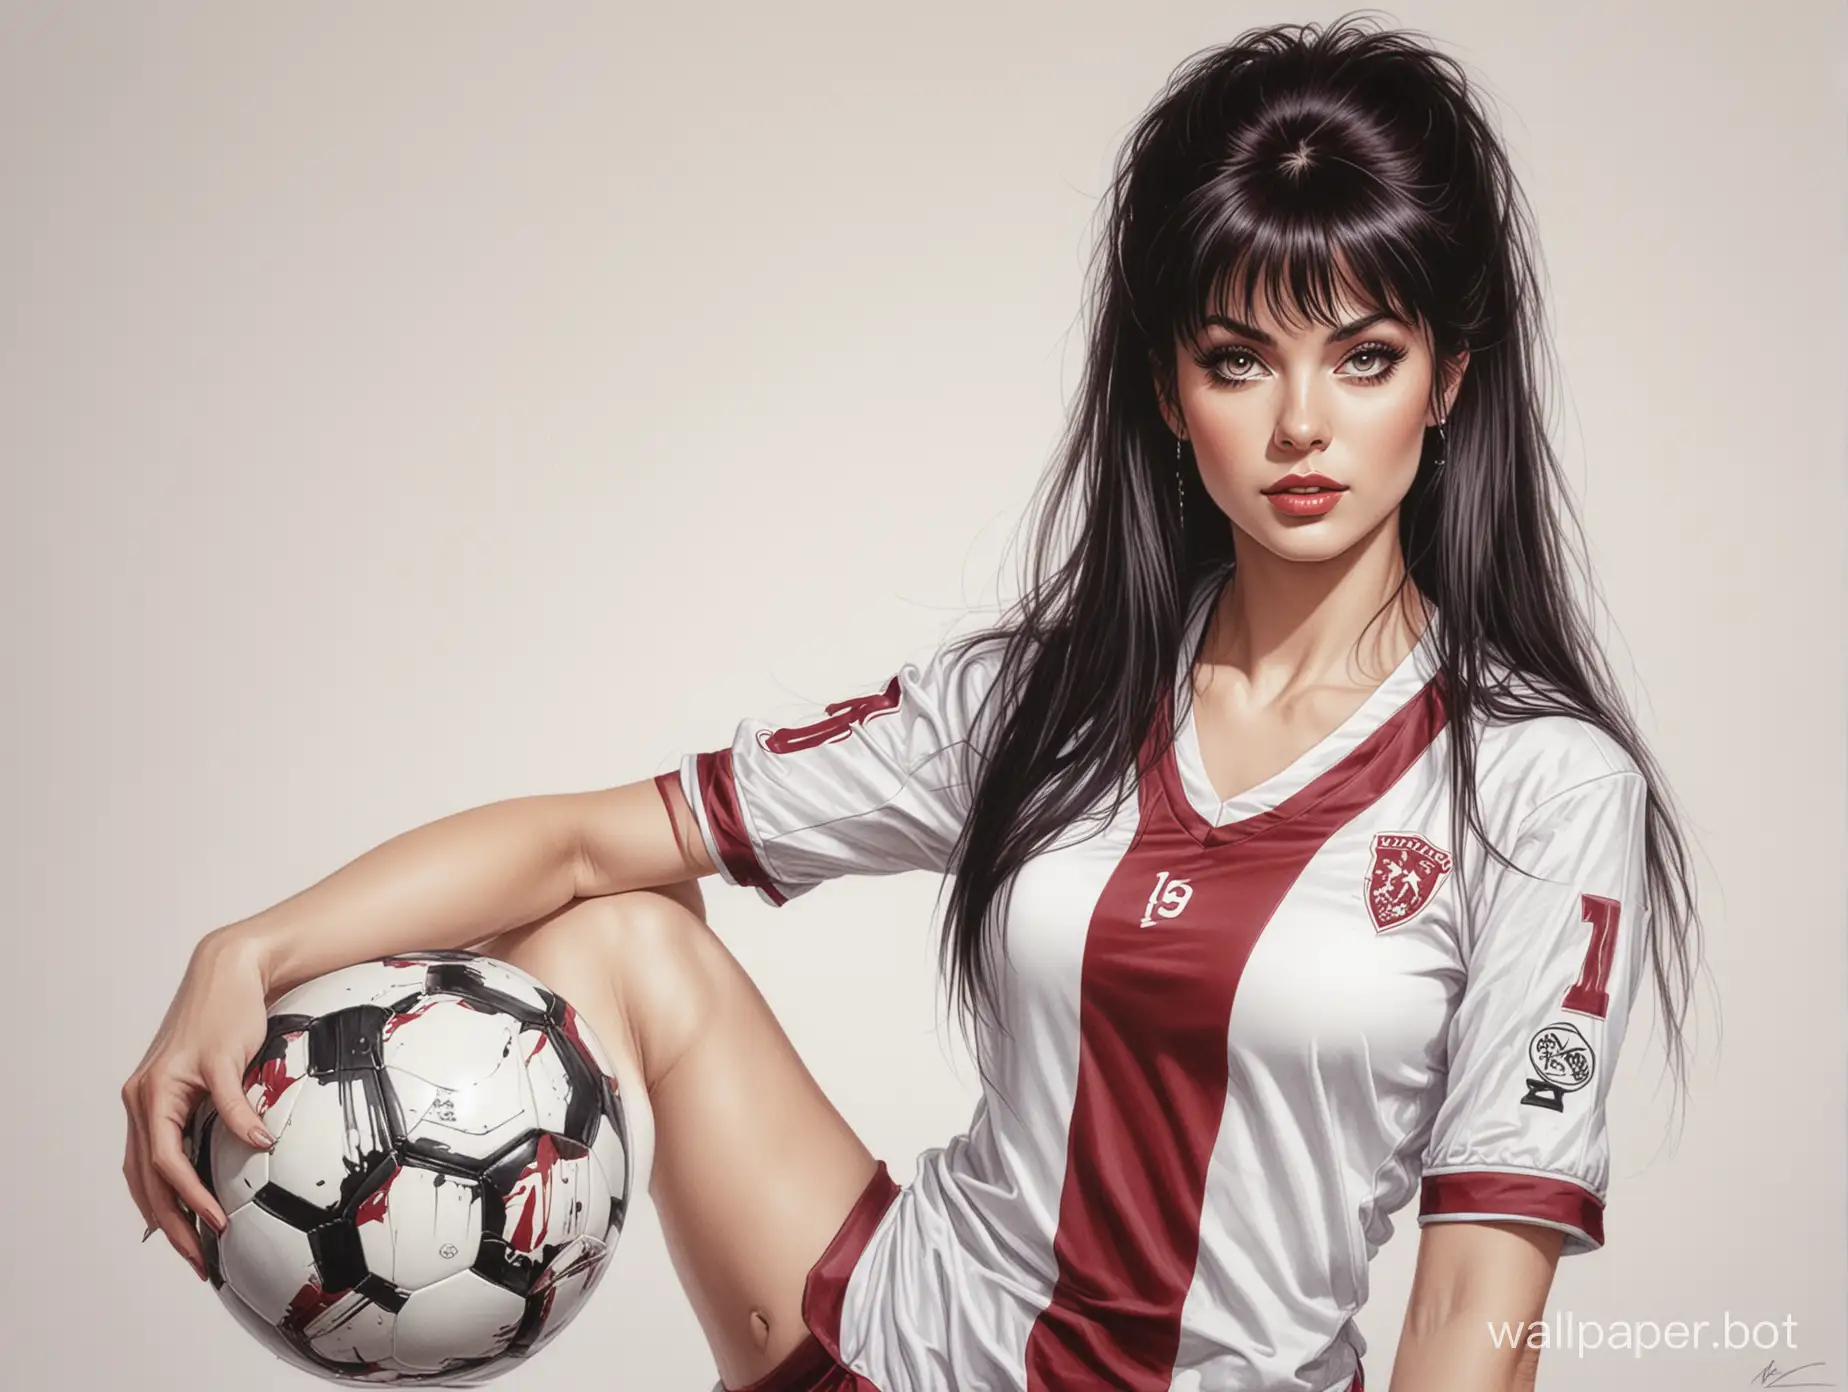 Portrait-Drawing-of-Elvira-19-in-WhiteBurgundy-Soccer-Uniform